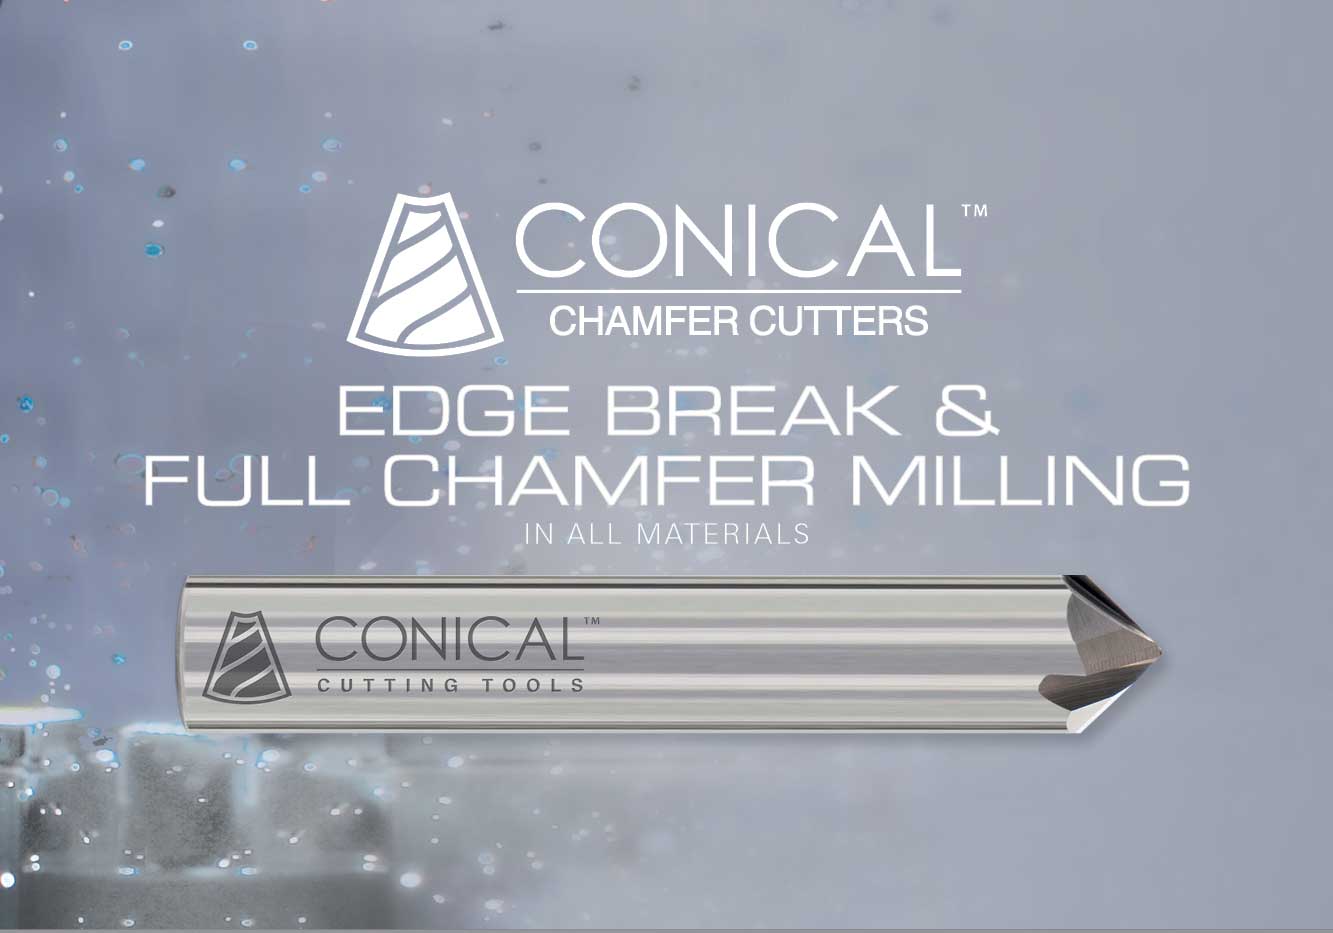 16-60mm 60° 90° Carbide Tip  4 Flutes Chamfer Cutter Milling Cutting 